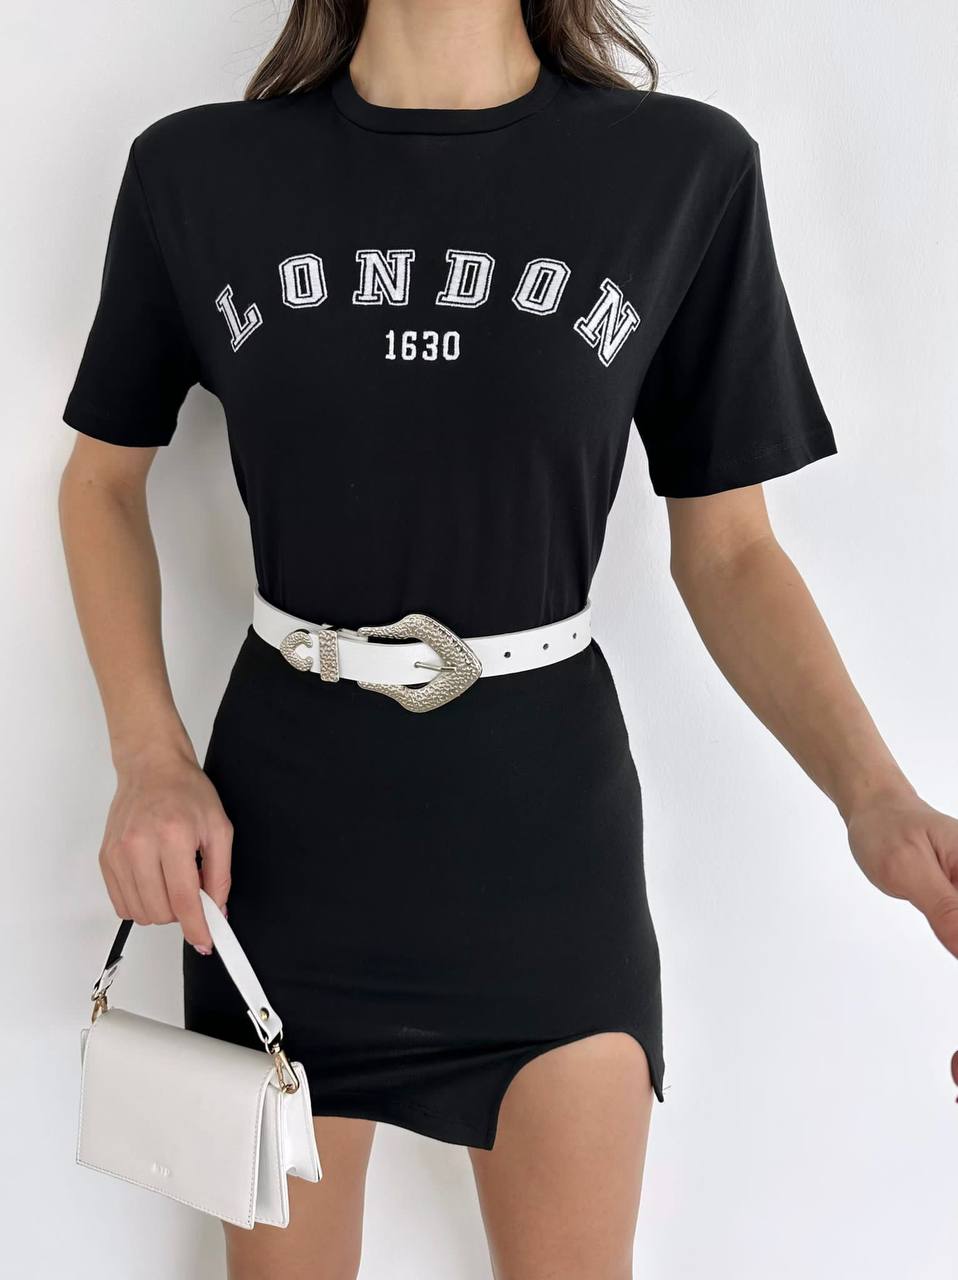 Black London 1630 T-shirt